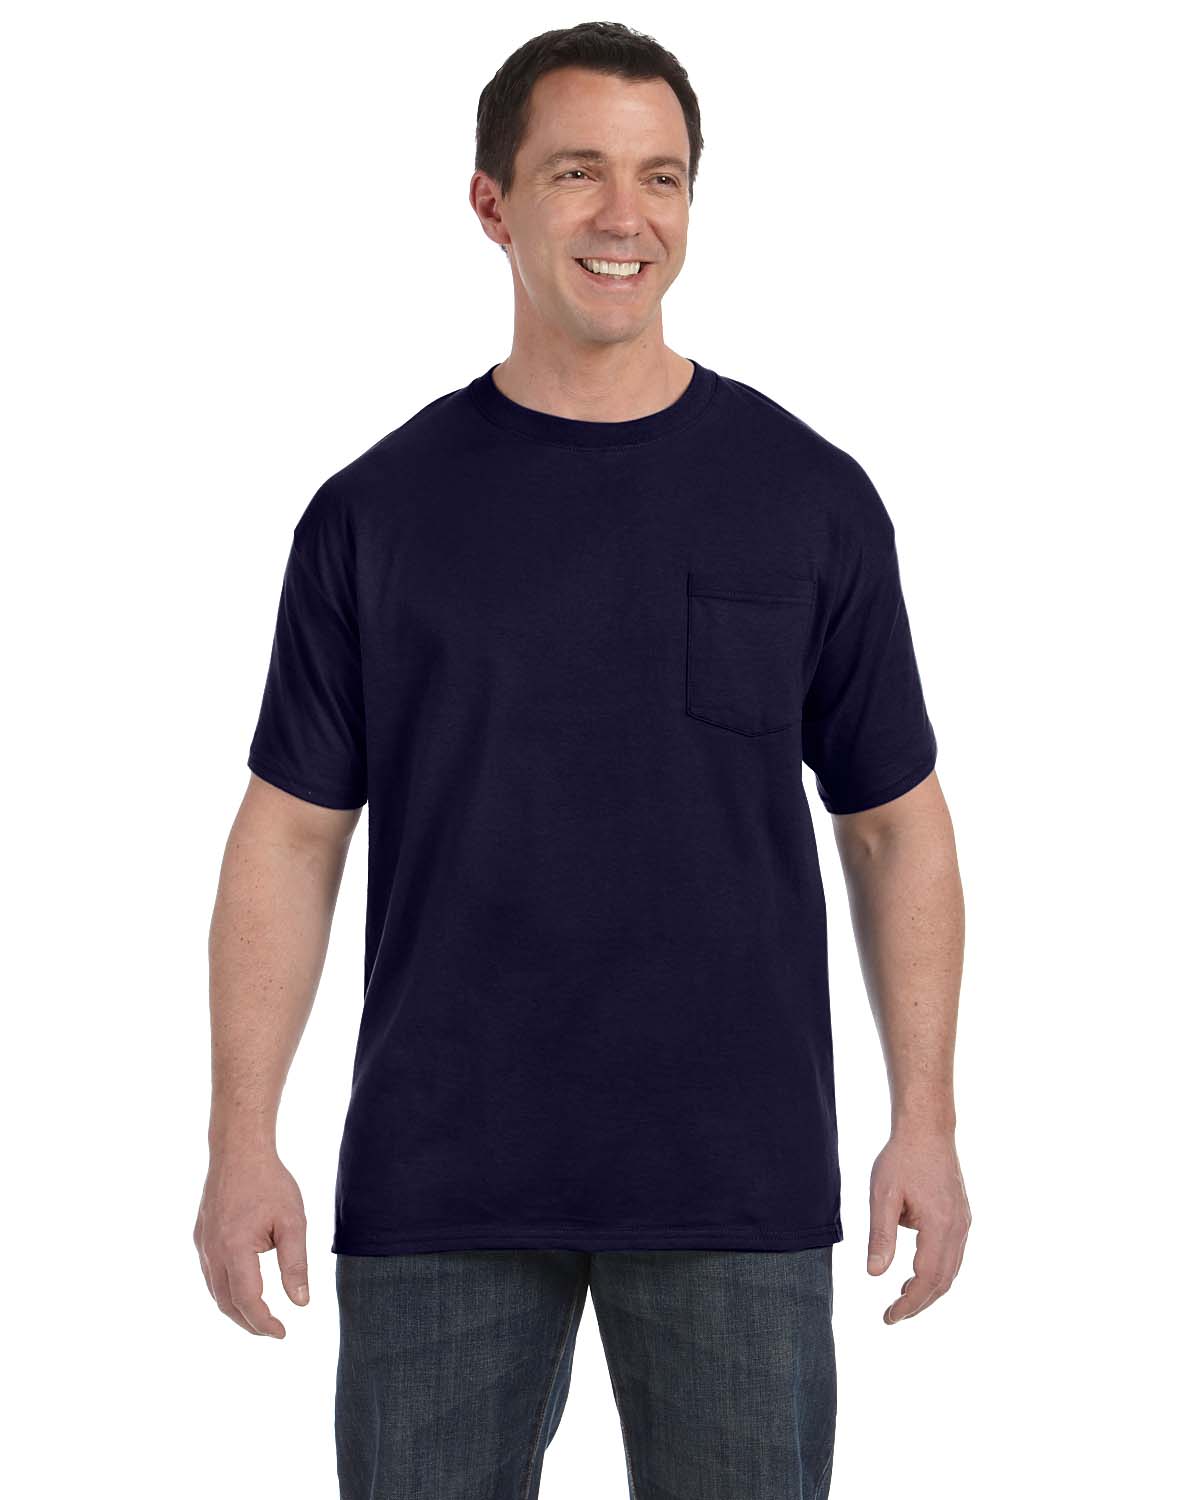 NEW Hanes Heavy 6.1 oz Tagless ComfortSoft Cotton S-XL Pocket T-Shirt R ...